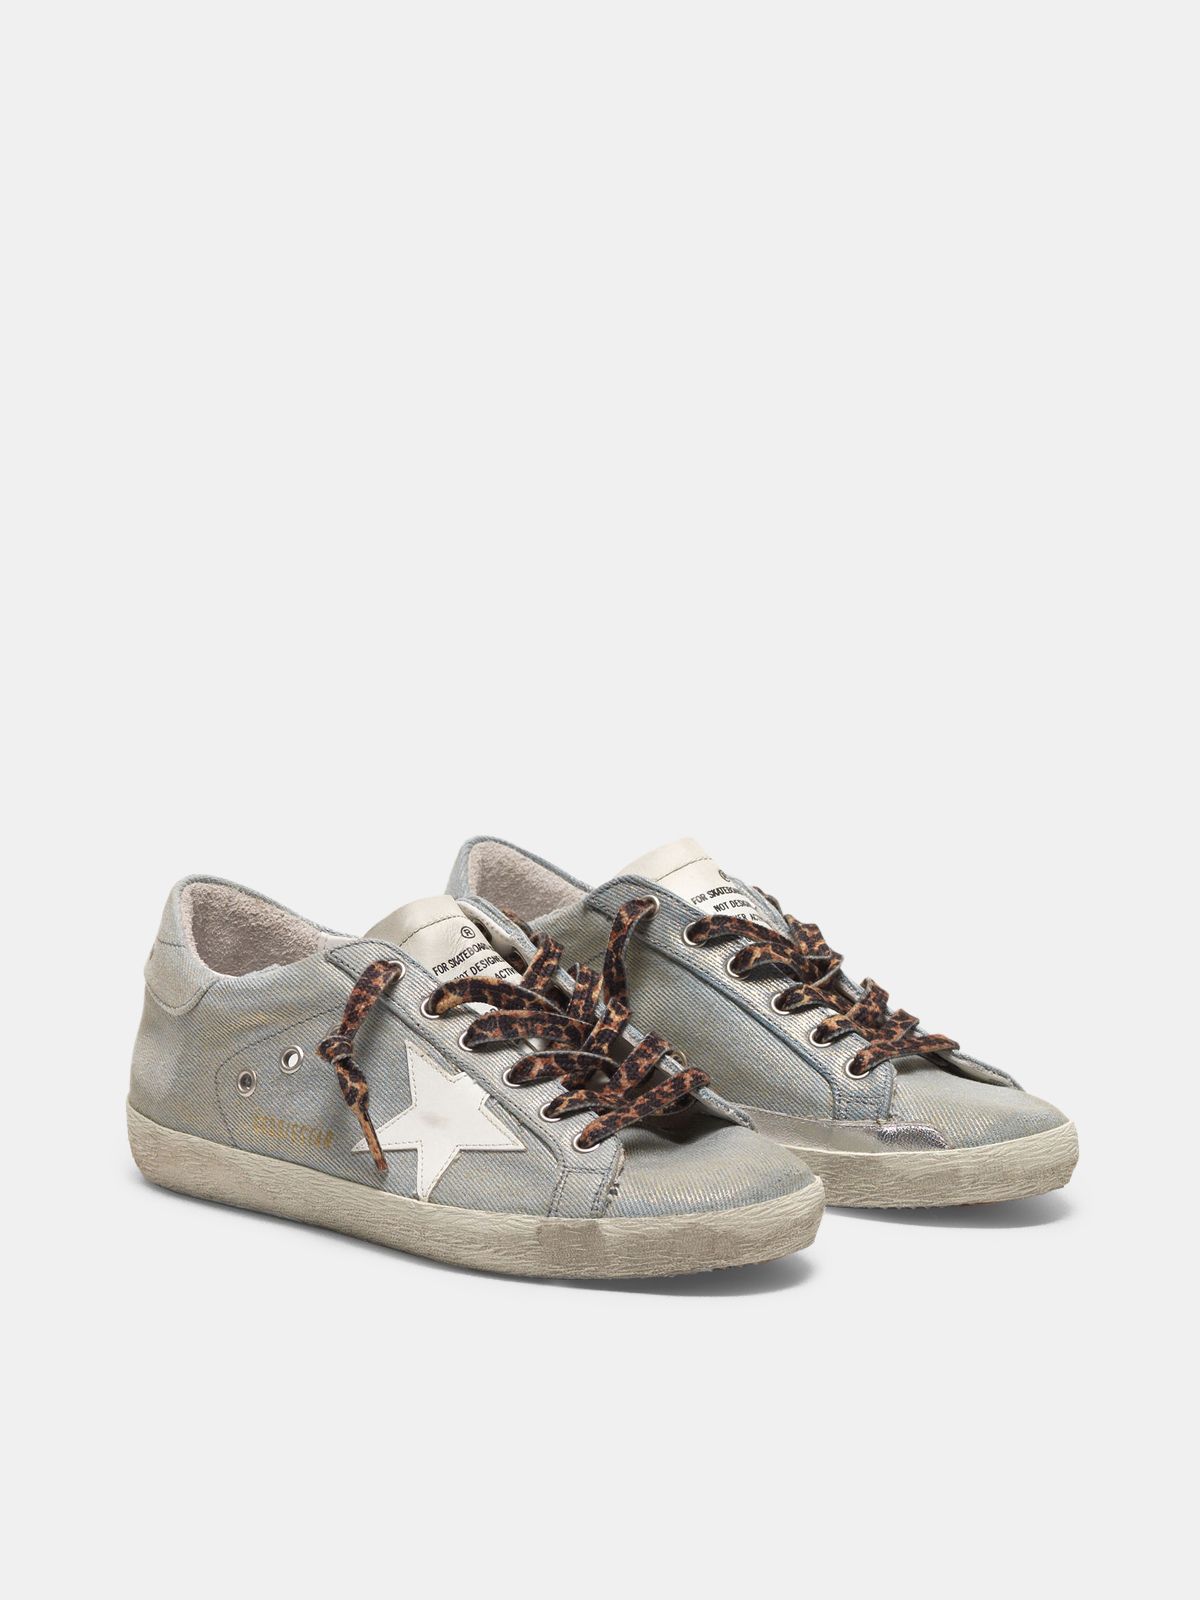 Bopæl Seletøj Diskant Super-Star sneakers in denim with leopard print laces | Golden Goose